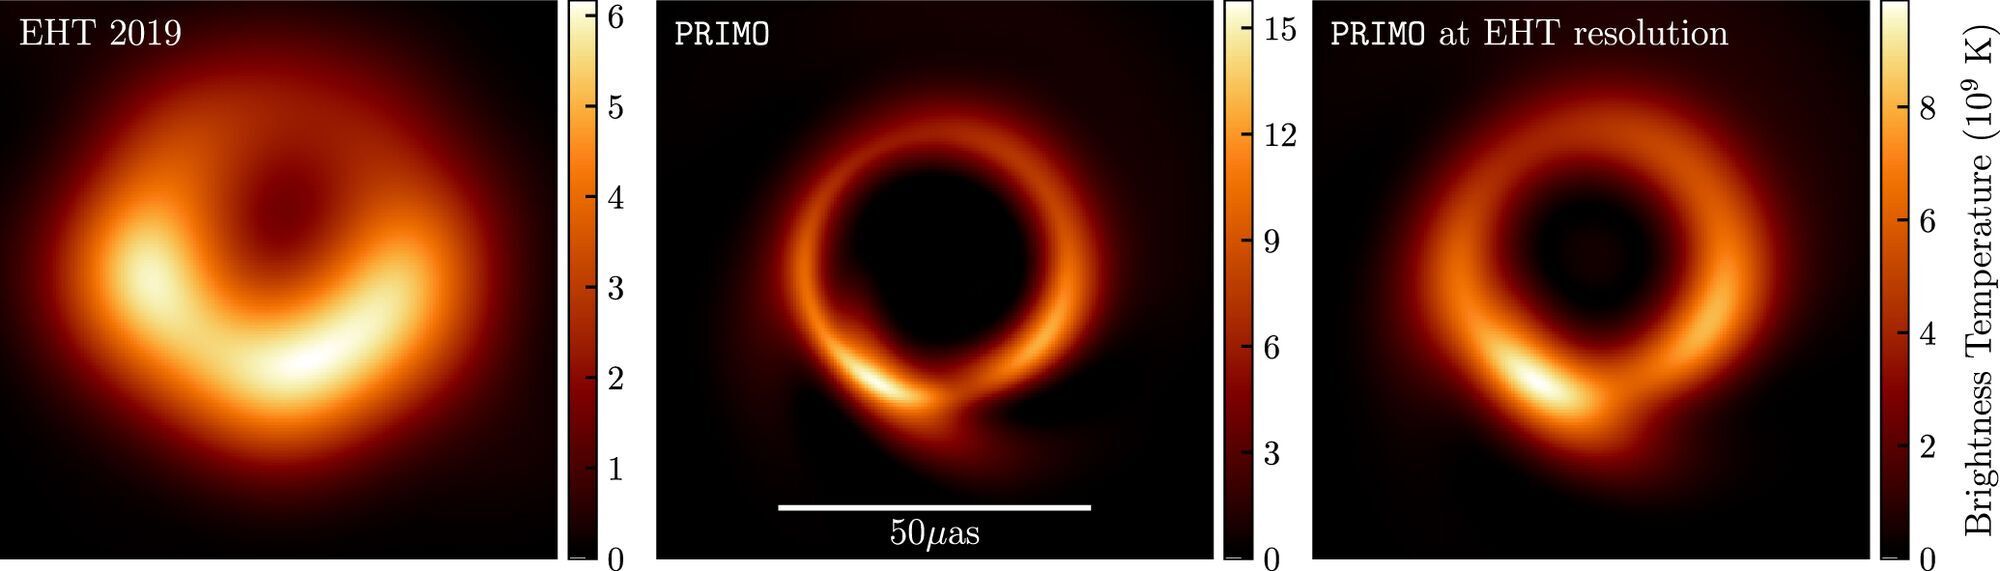 M87 black hole after PRIMO AI treatment.